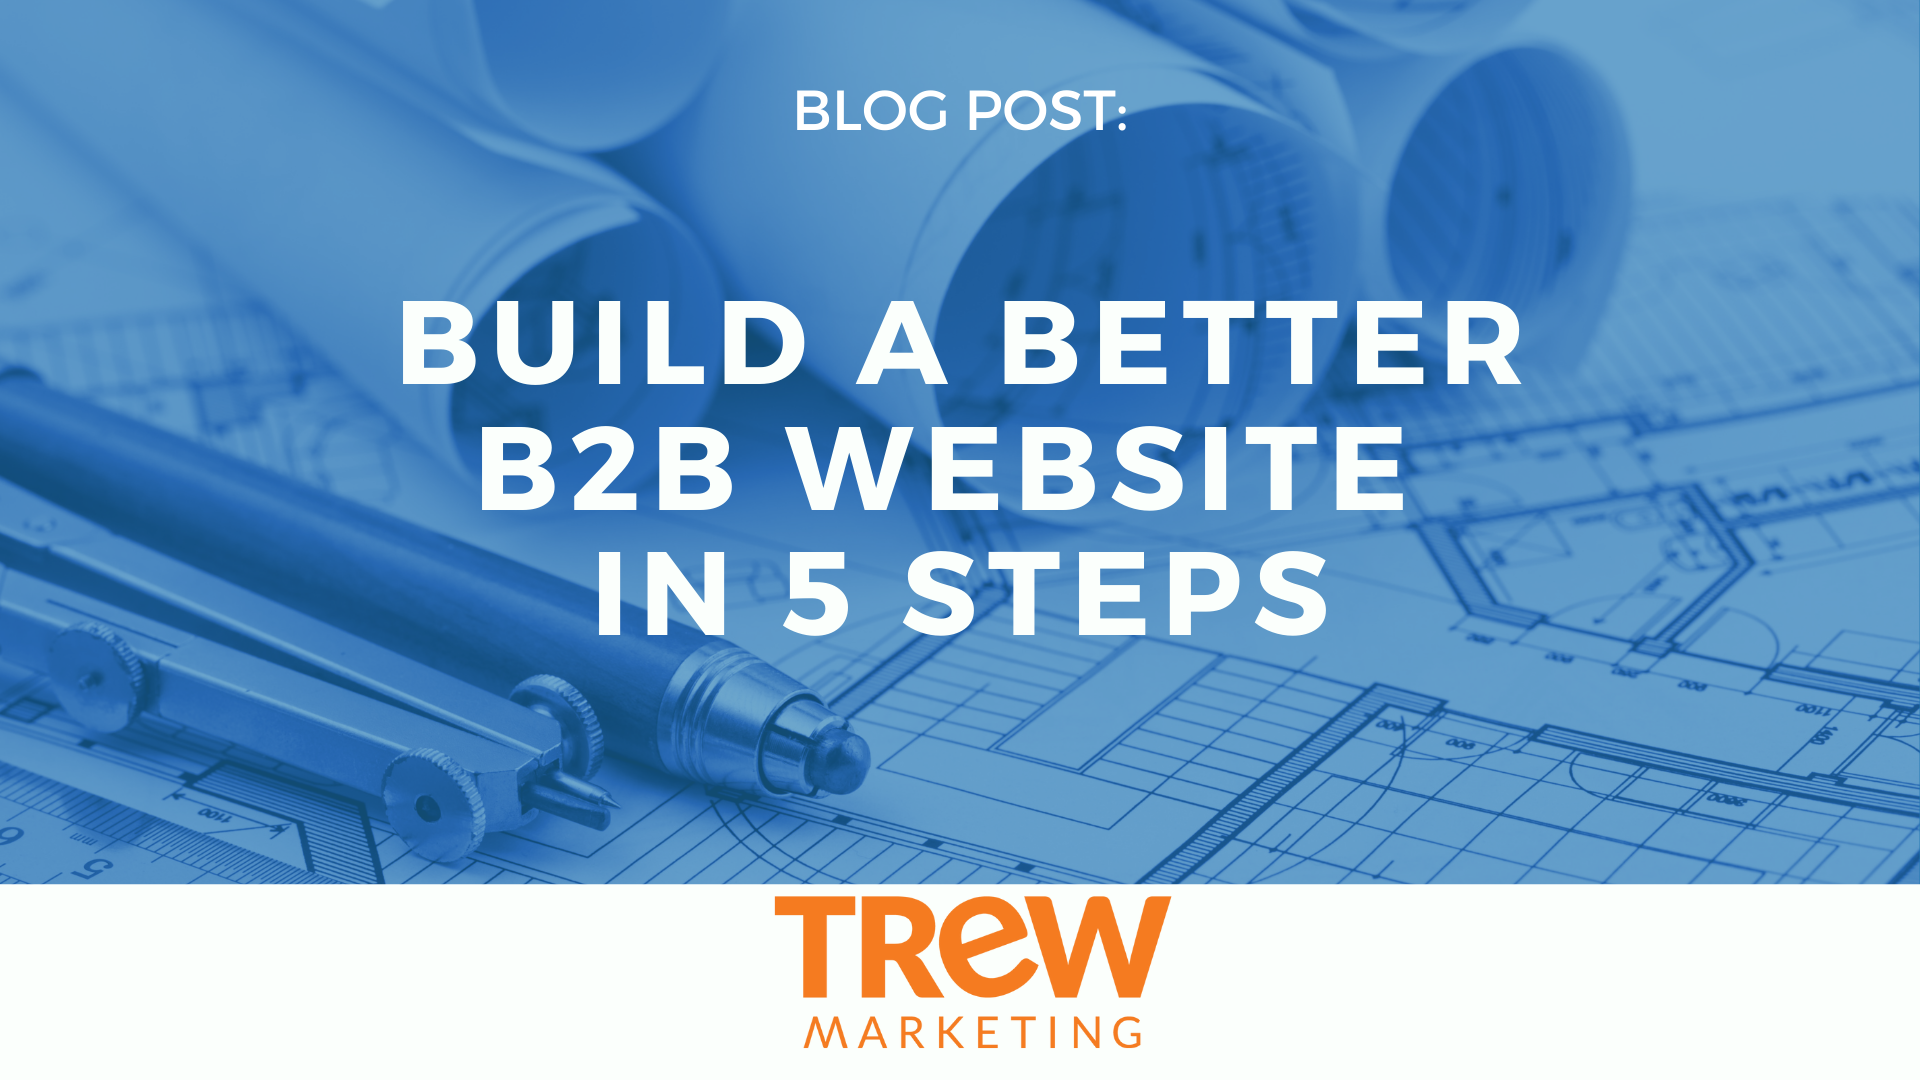 Build a better B2B website in 5 steps blog